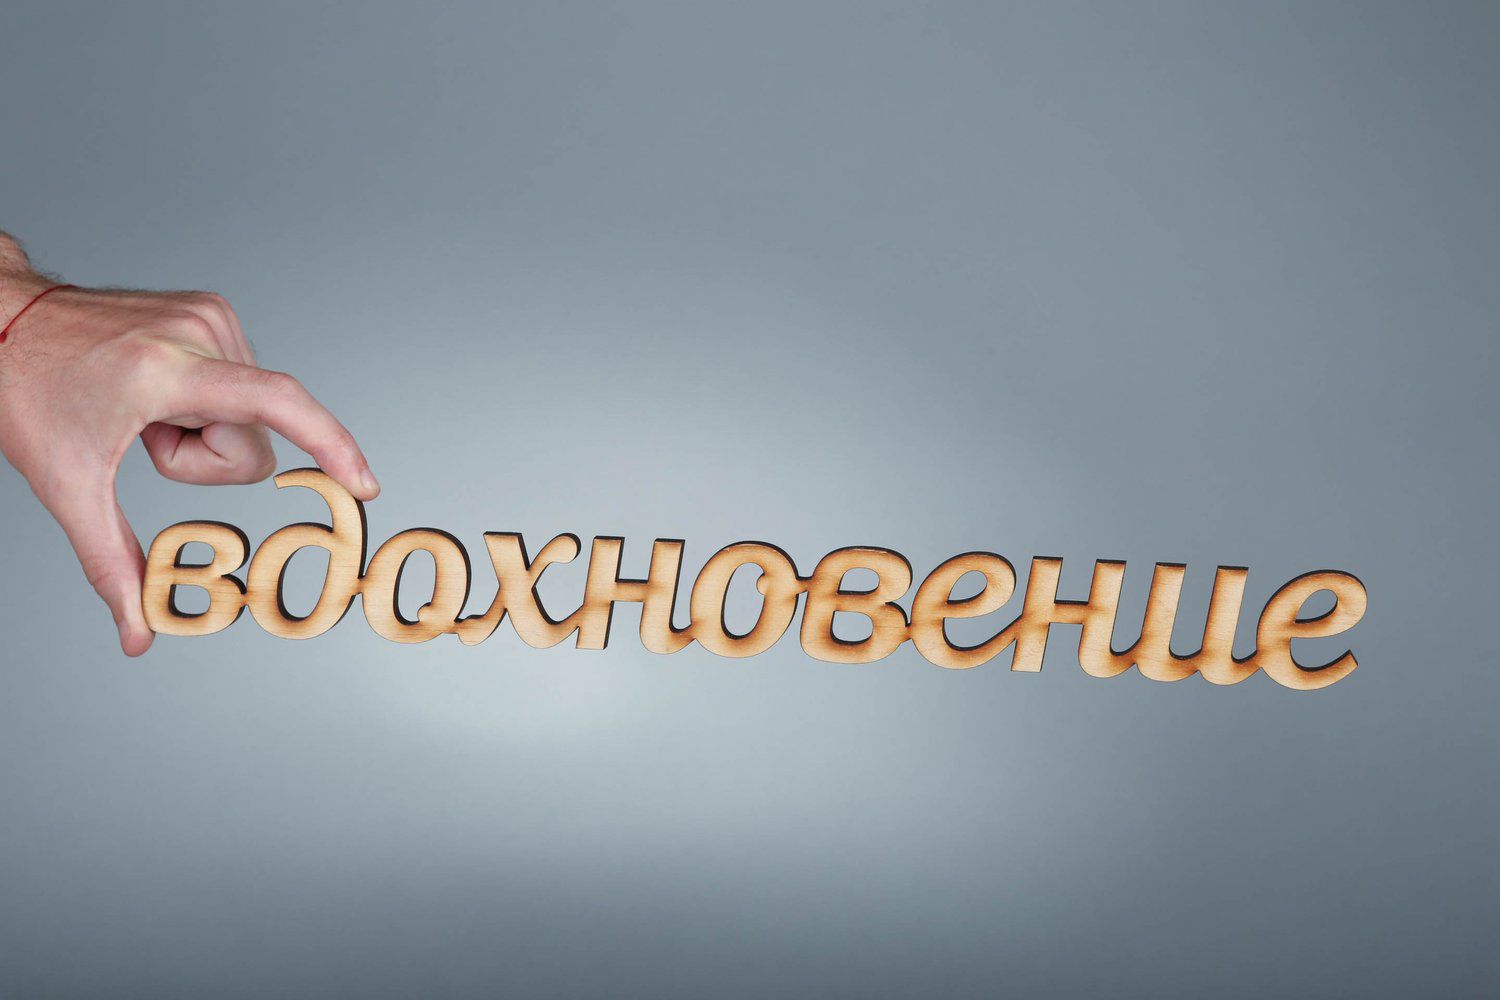 Chipboard scrapbooking en bois inscription Vdohnovenyie en russe L'inspiration photo 3